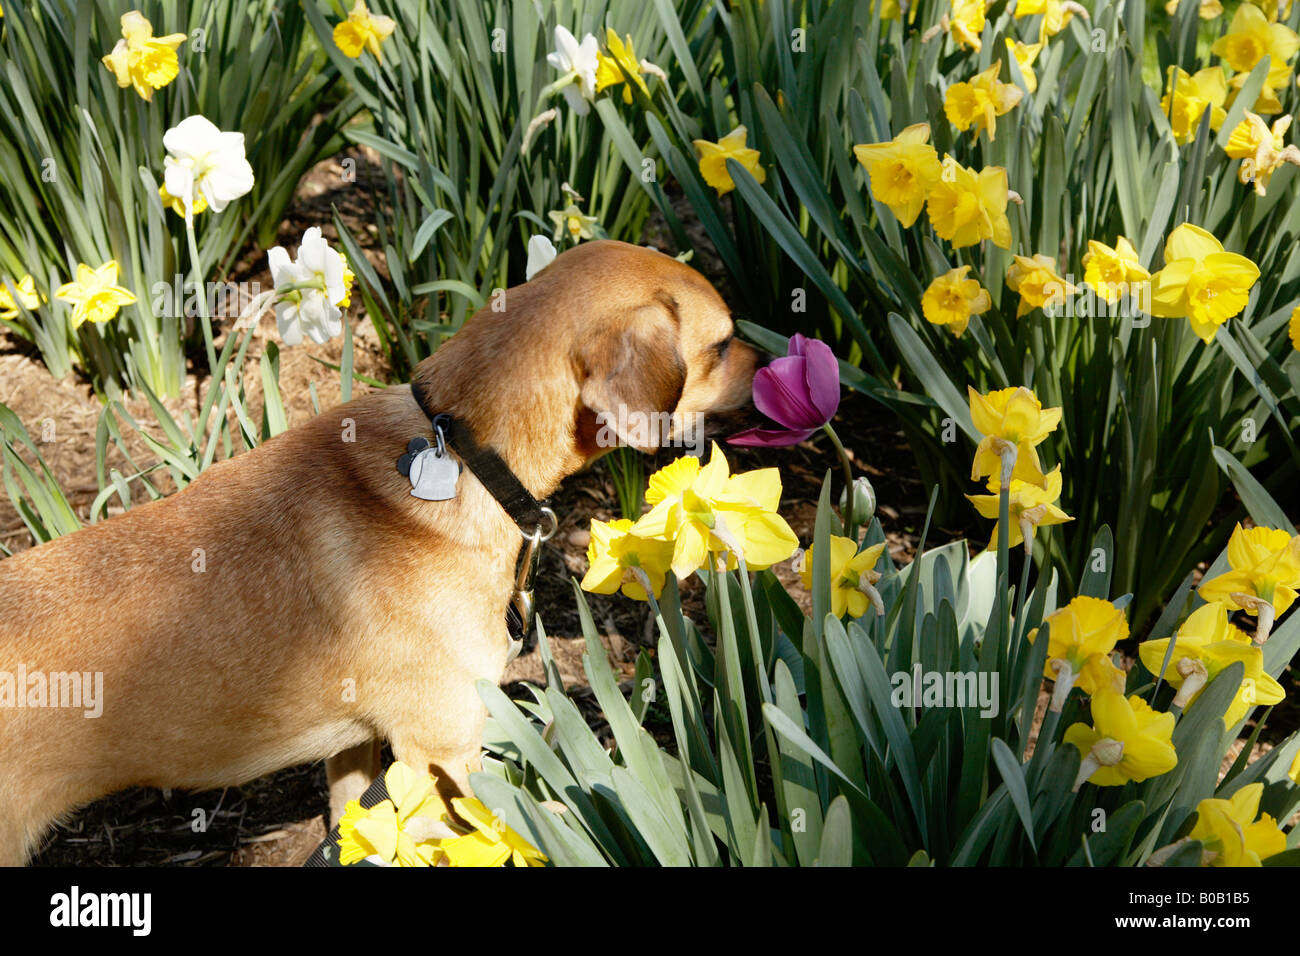 Dog smelling flowers Stock Photo